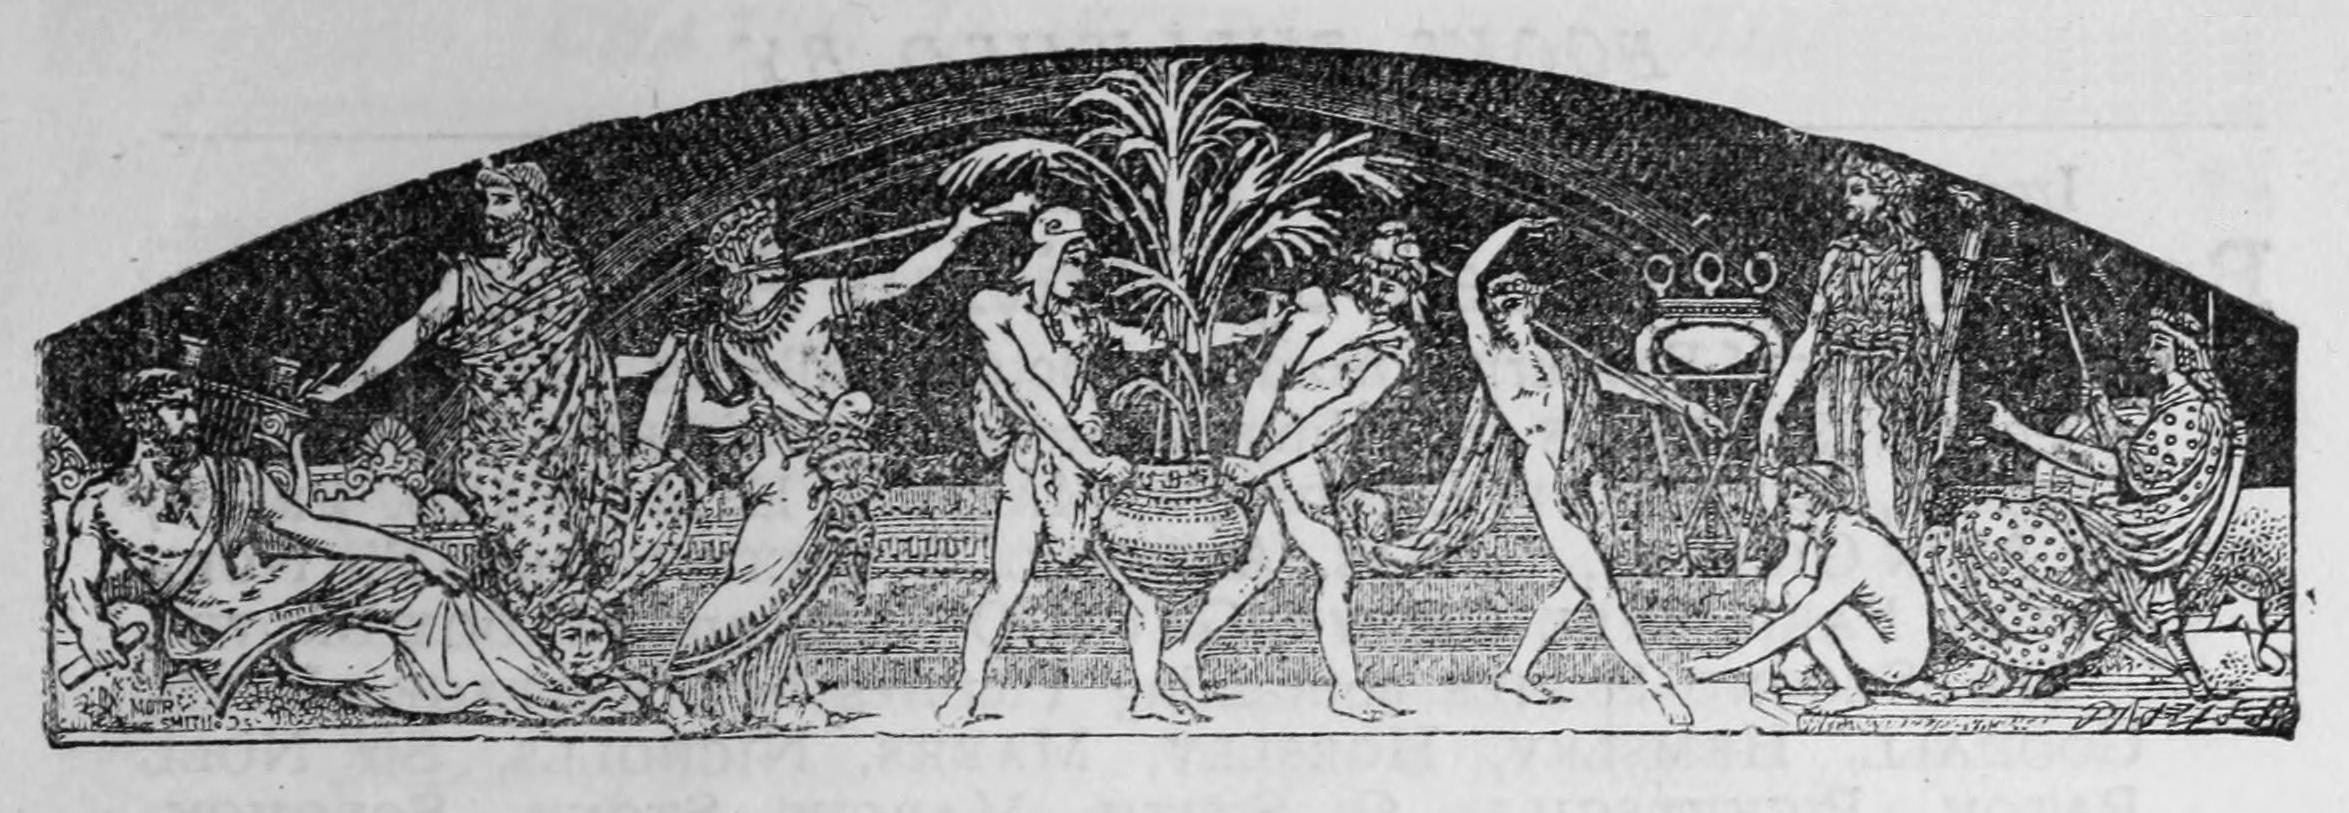 Decorative illustration of nine mythological figures; two in the center holding a large potted plant